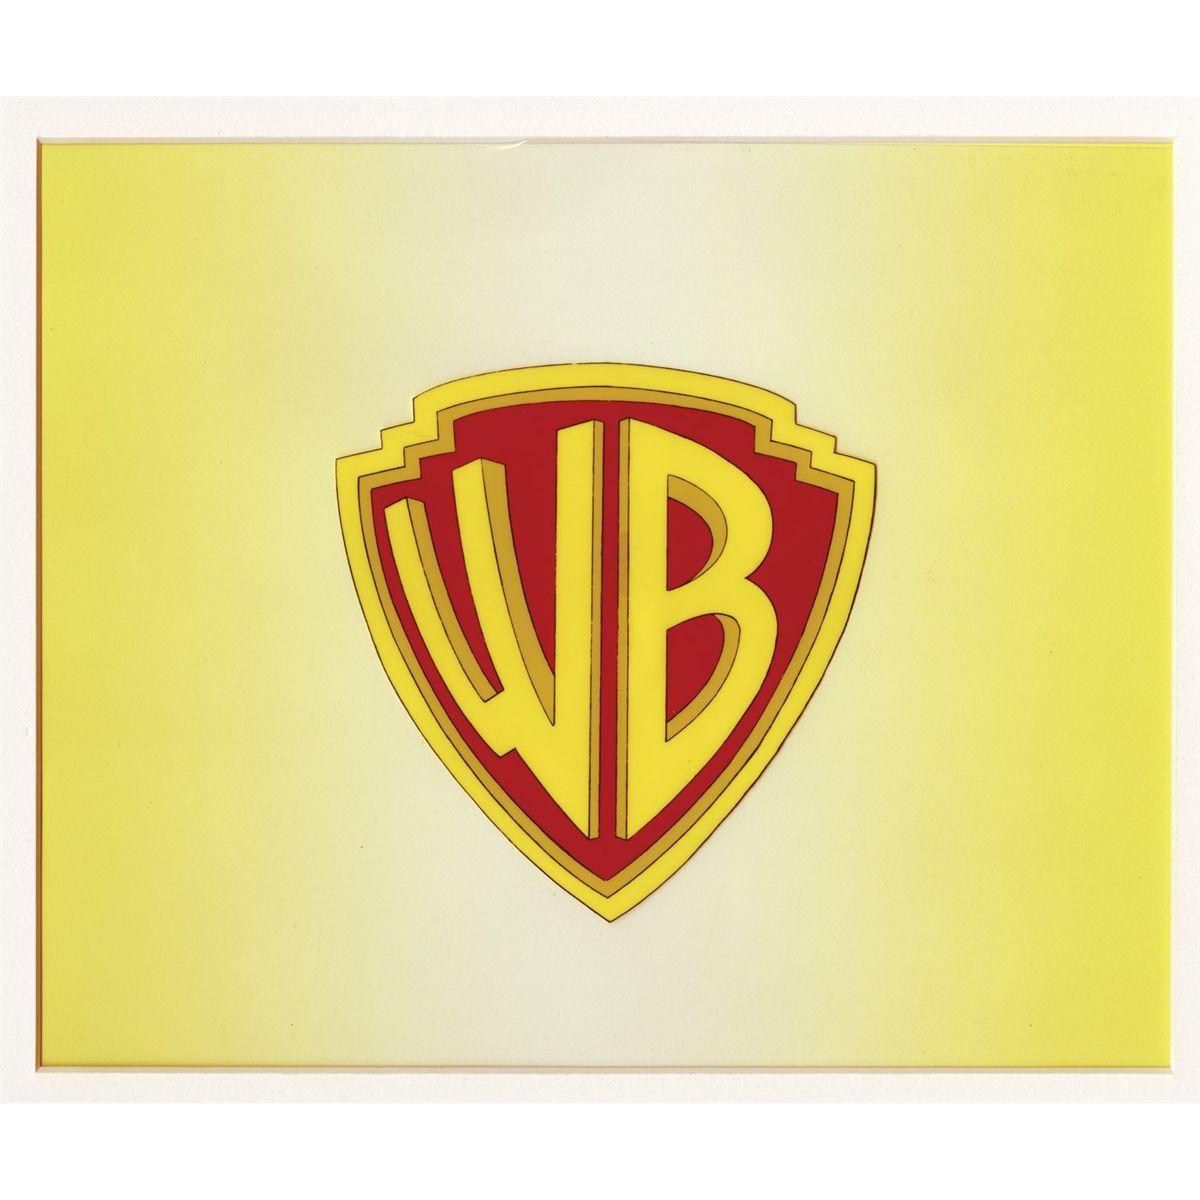 WarnerBros Shield Logo - Original production cel of Warner Bros. Shield from 24 Carrot Golden